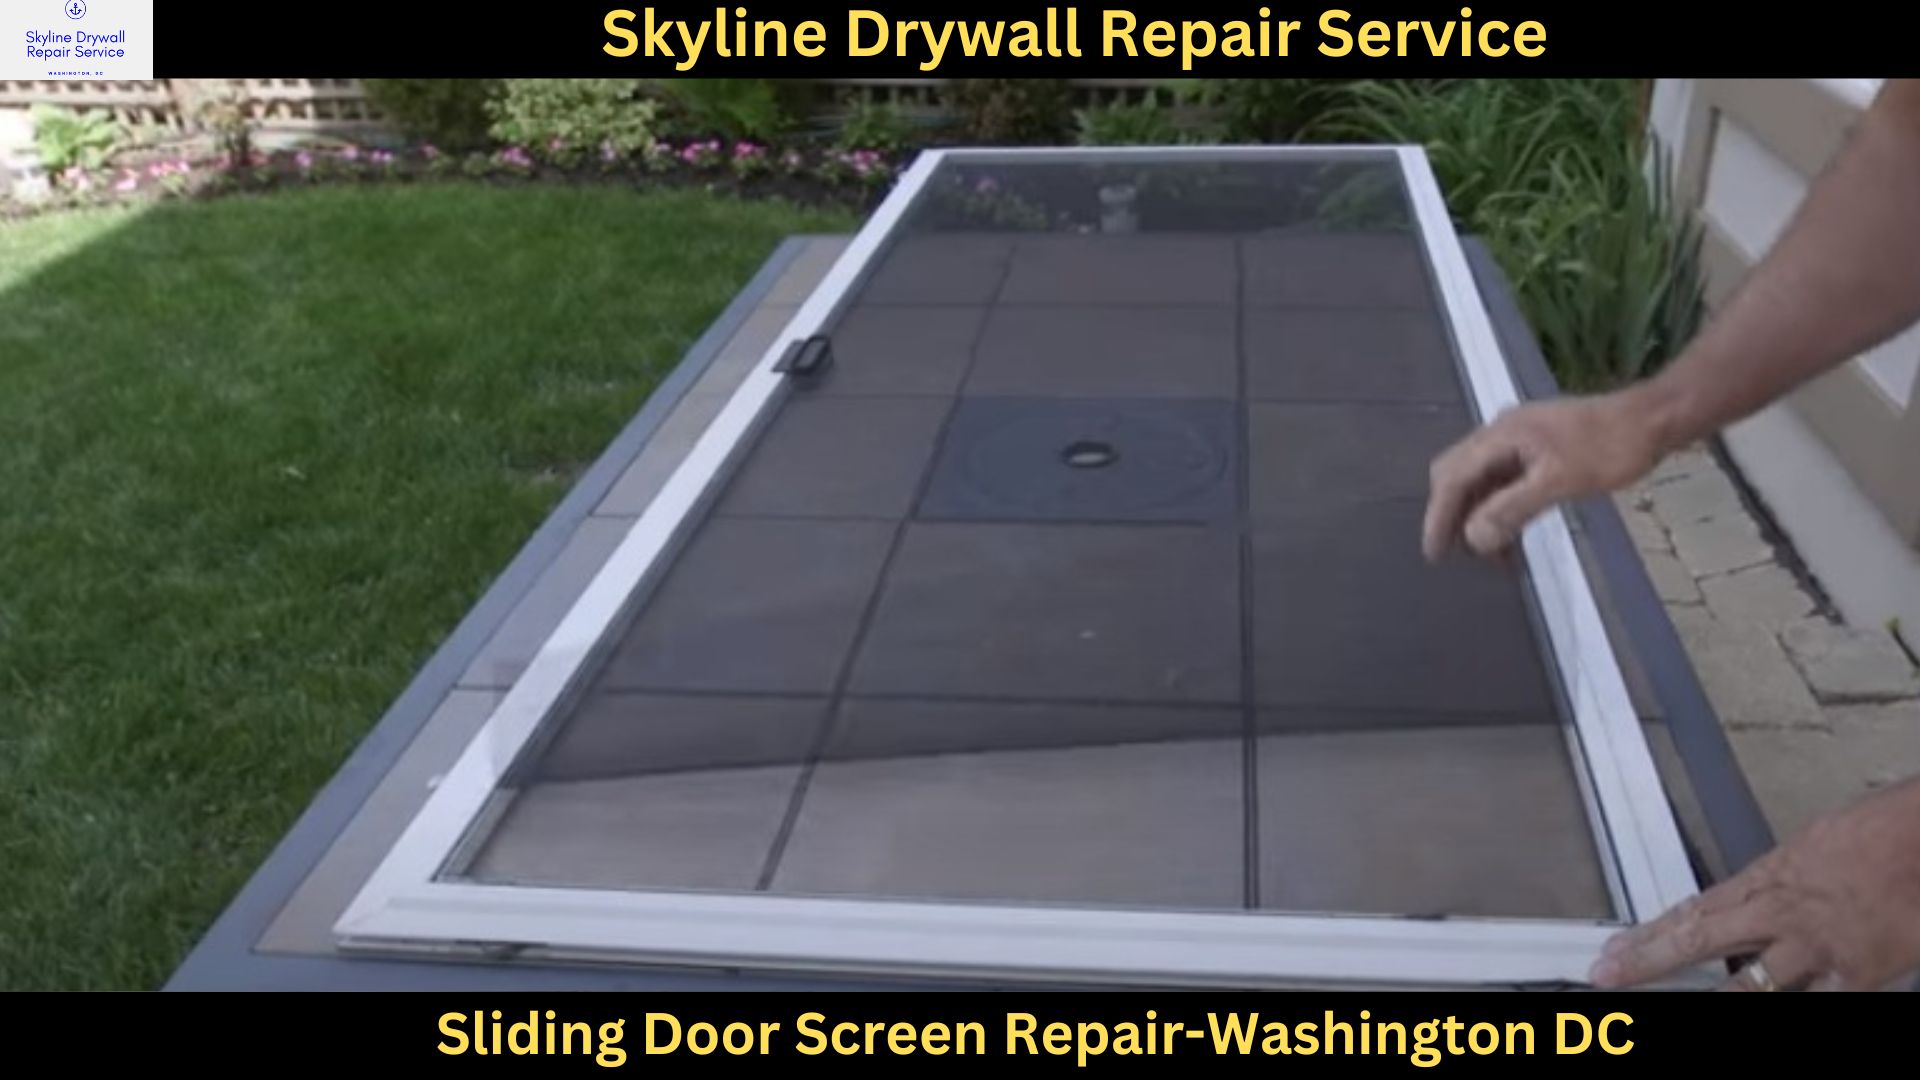 Skyline Drywall Repair Service in Washington DC